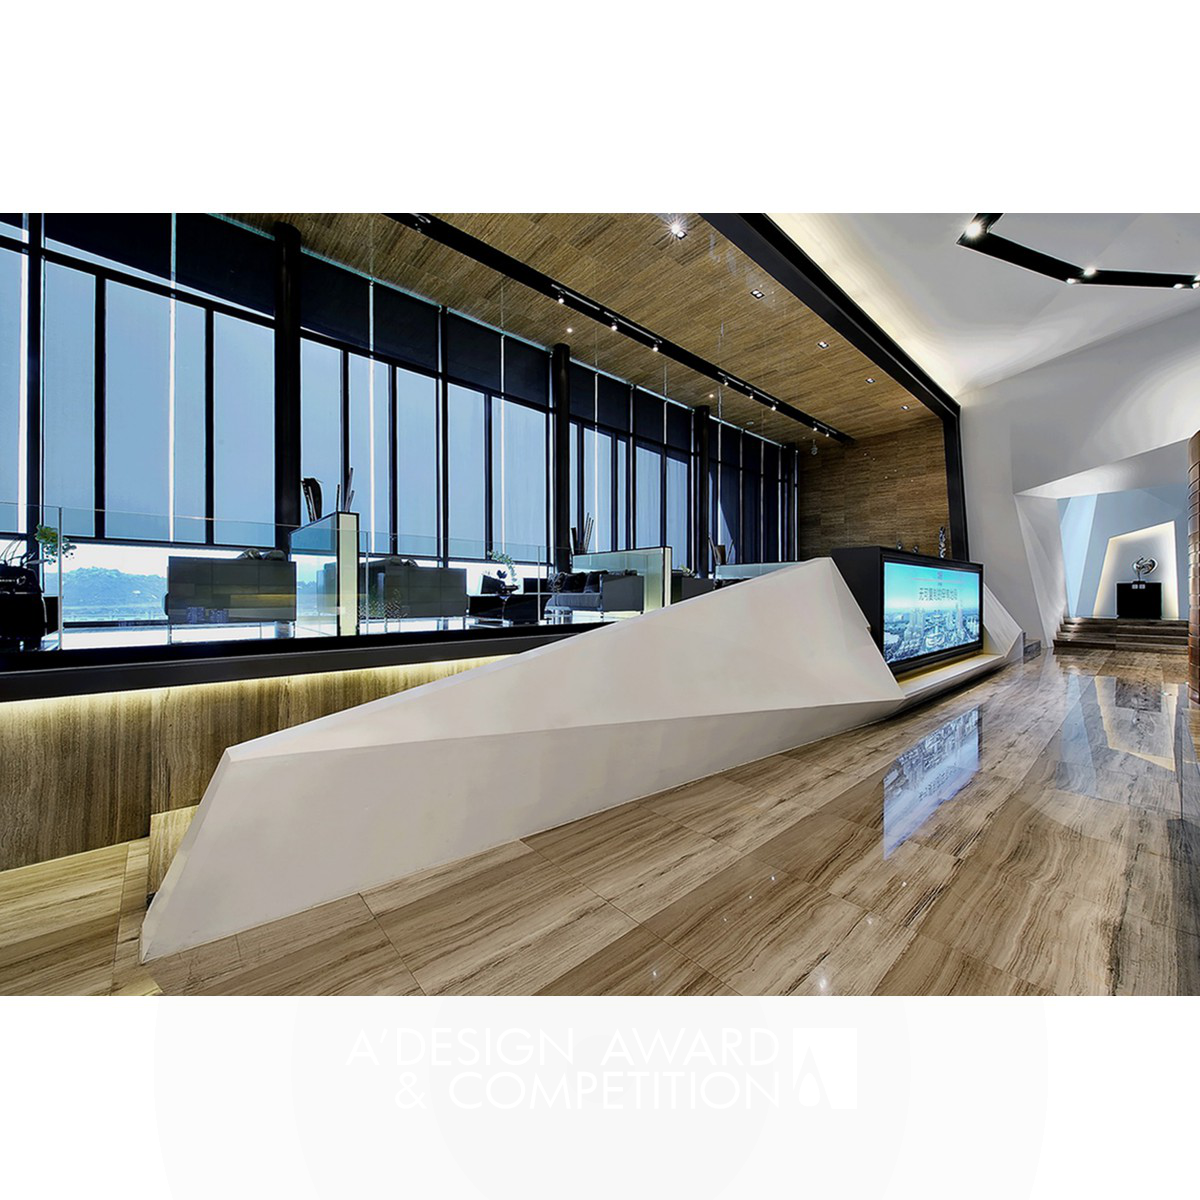 Mingli Metro Real Estate Sales Centre by Kris Lin Silver Interior Space and Exhibition Design Award Winner 2013 